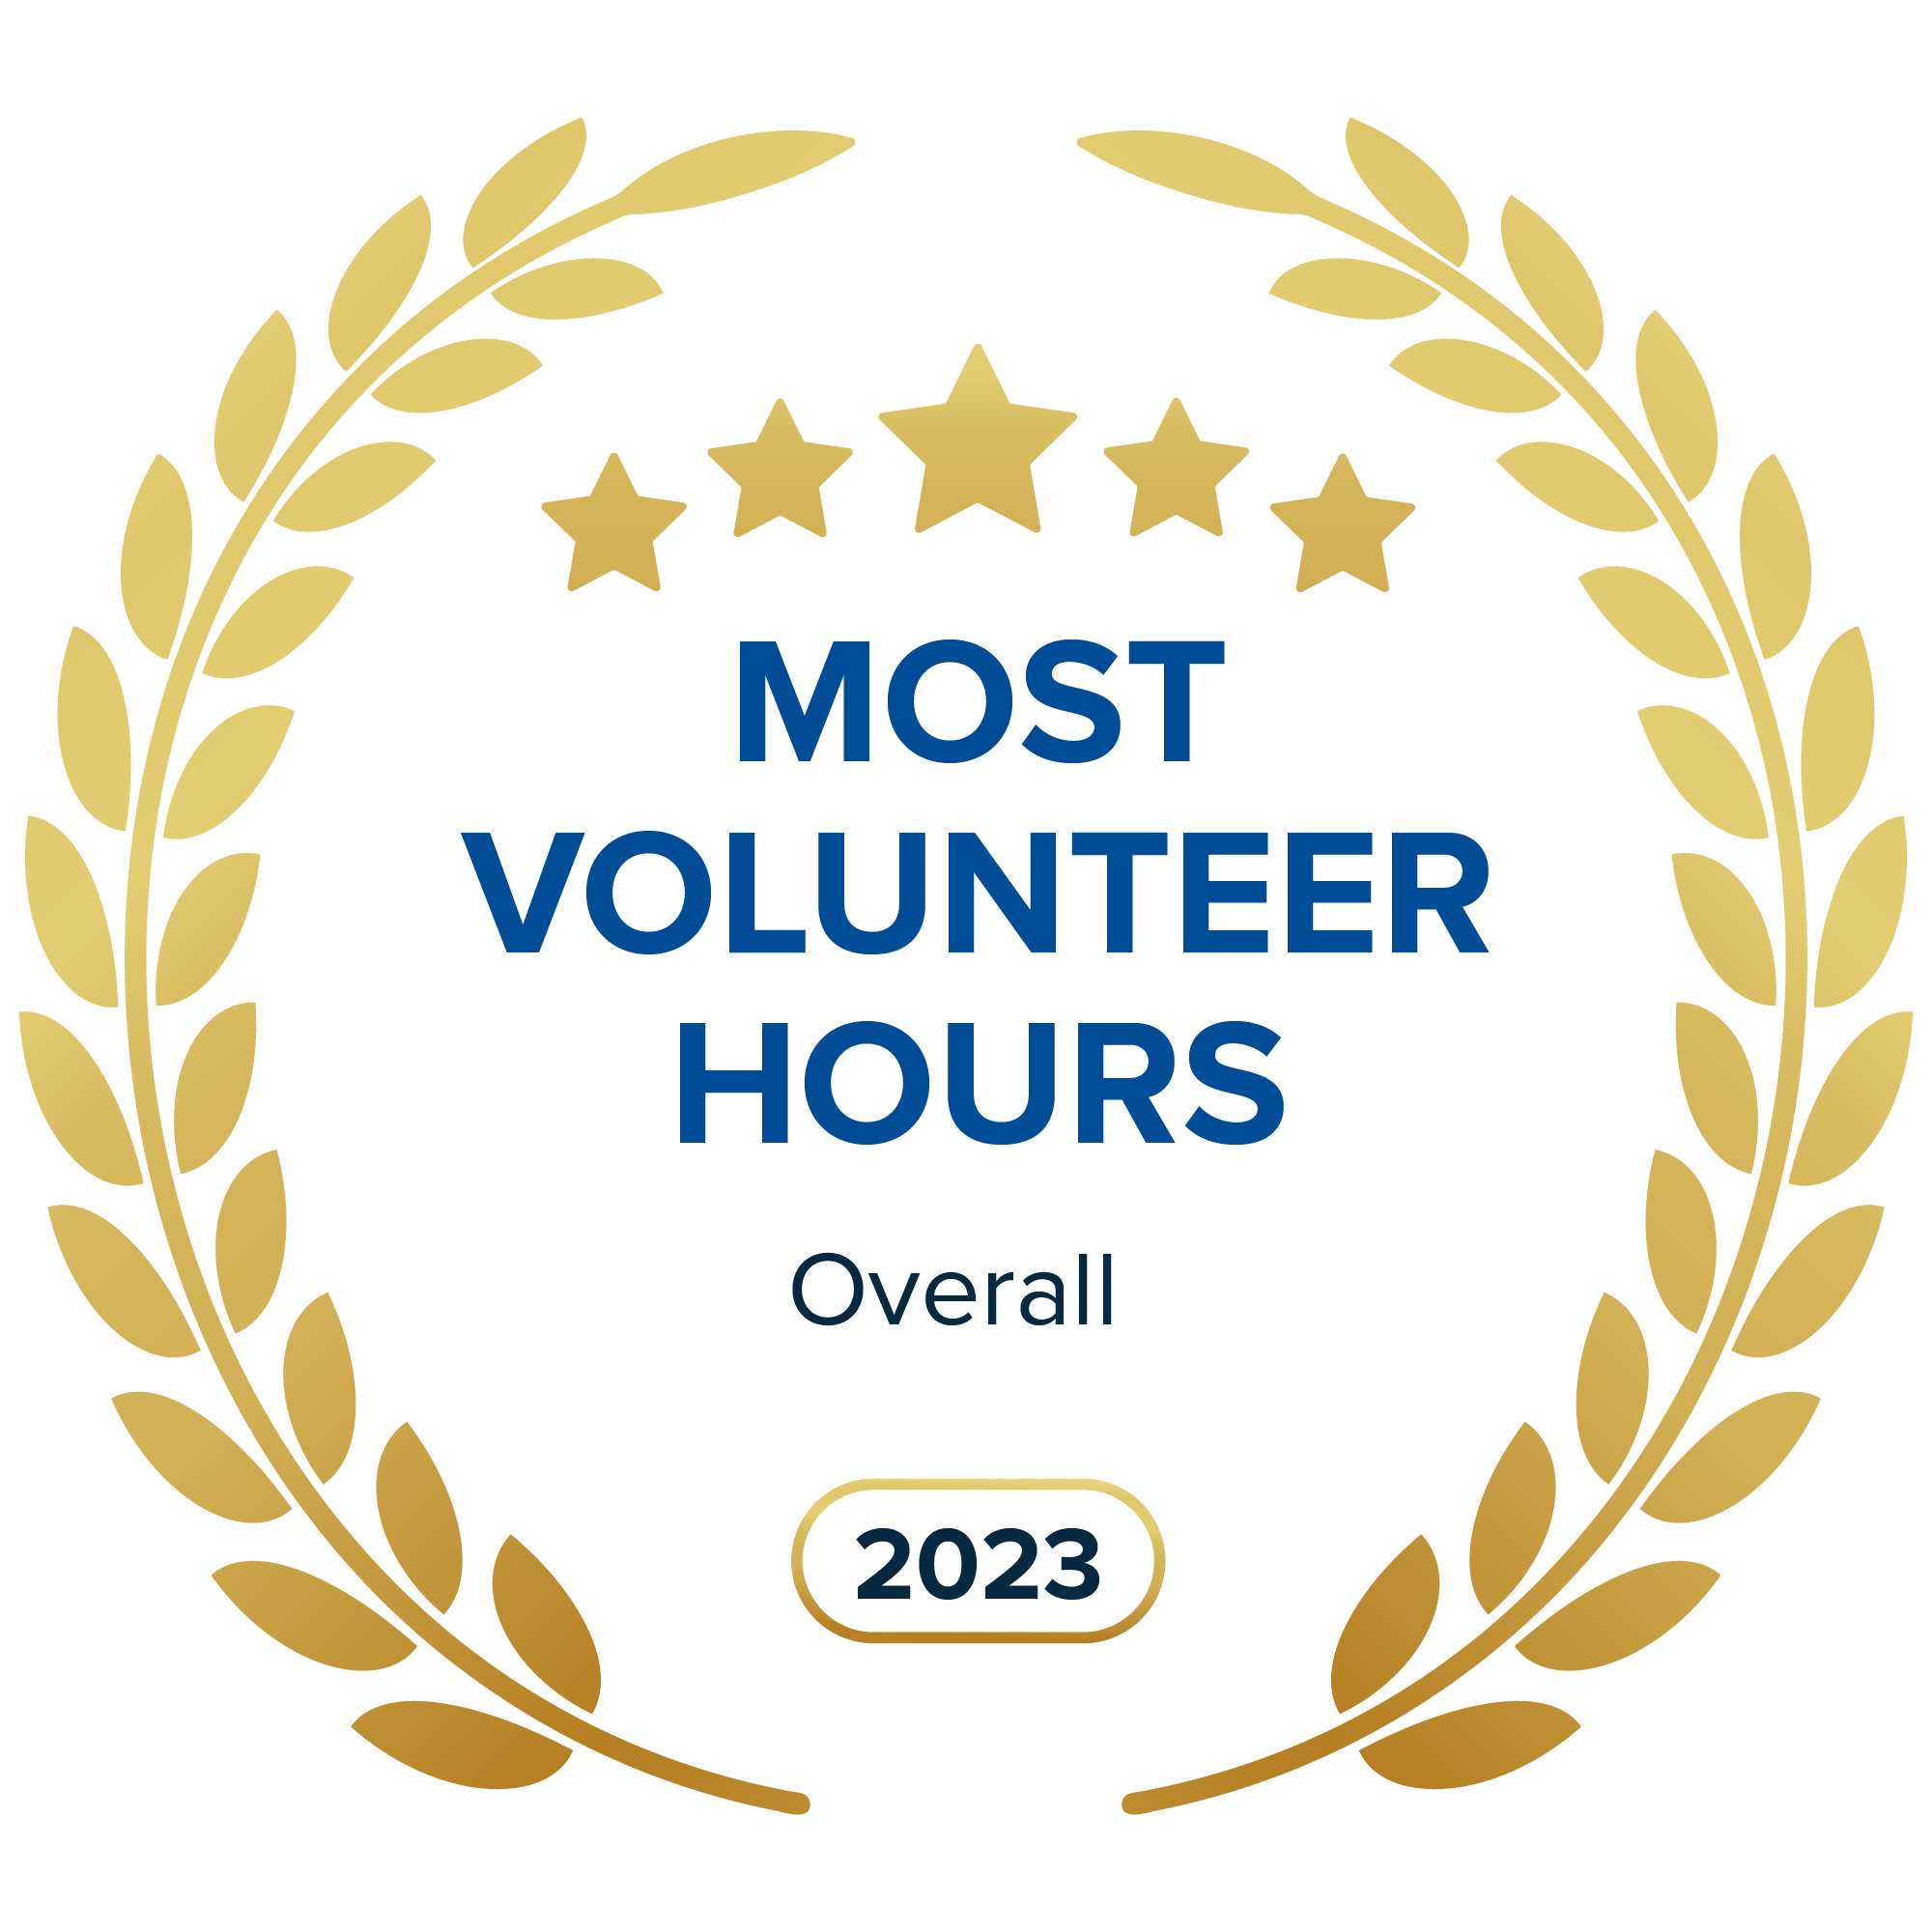 2023 Volunteer Awards Most Volunteer Hours